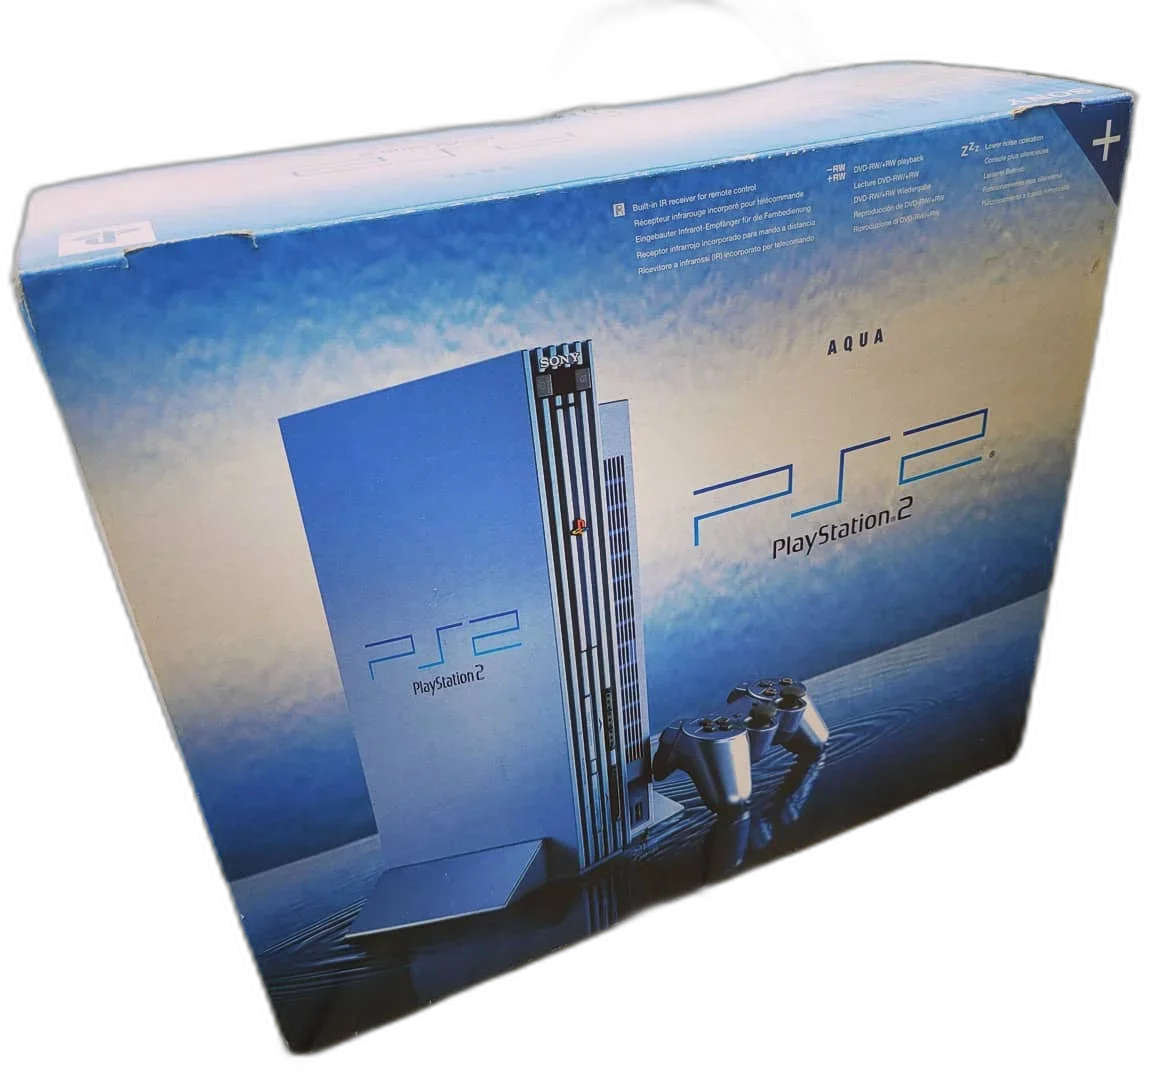  Sony PlayStation 2 Aqua Blue Console [EU]